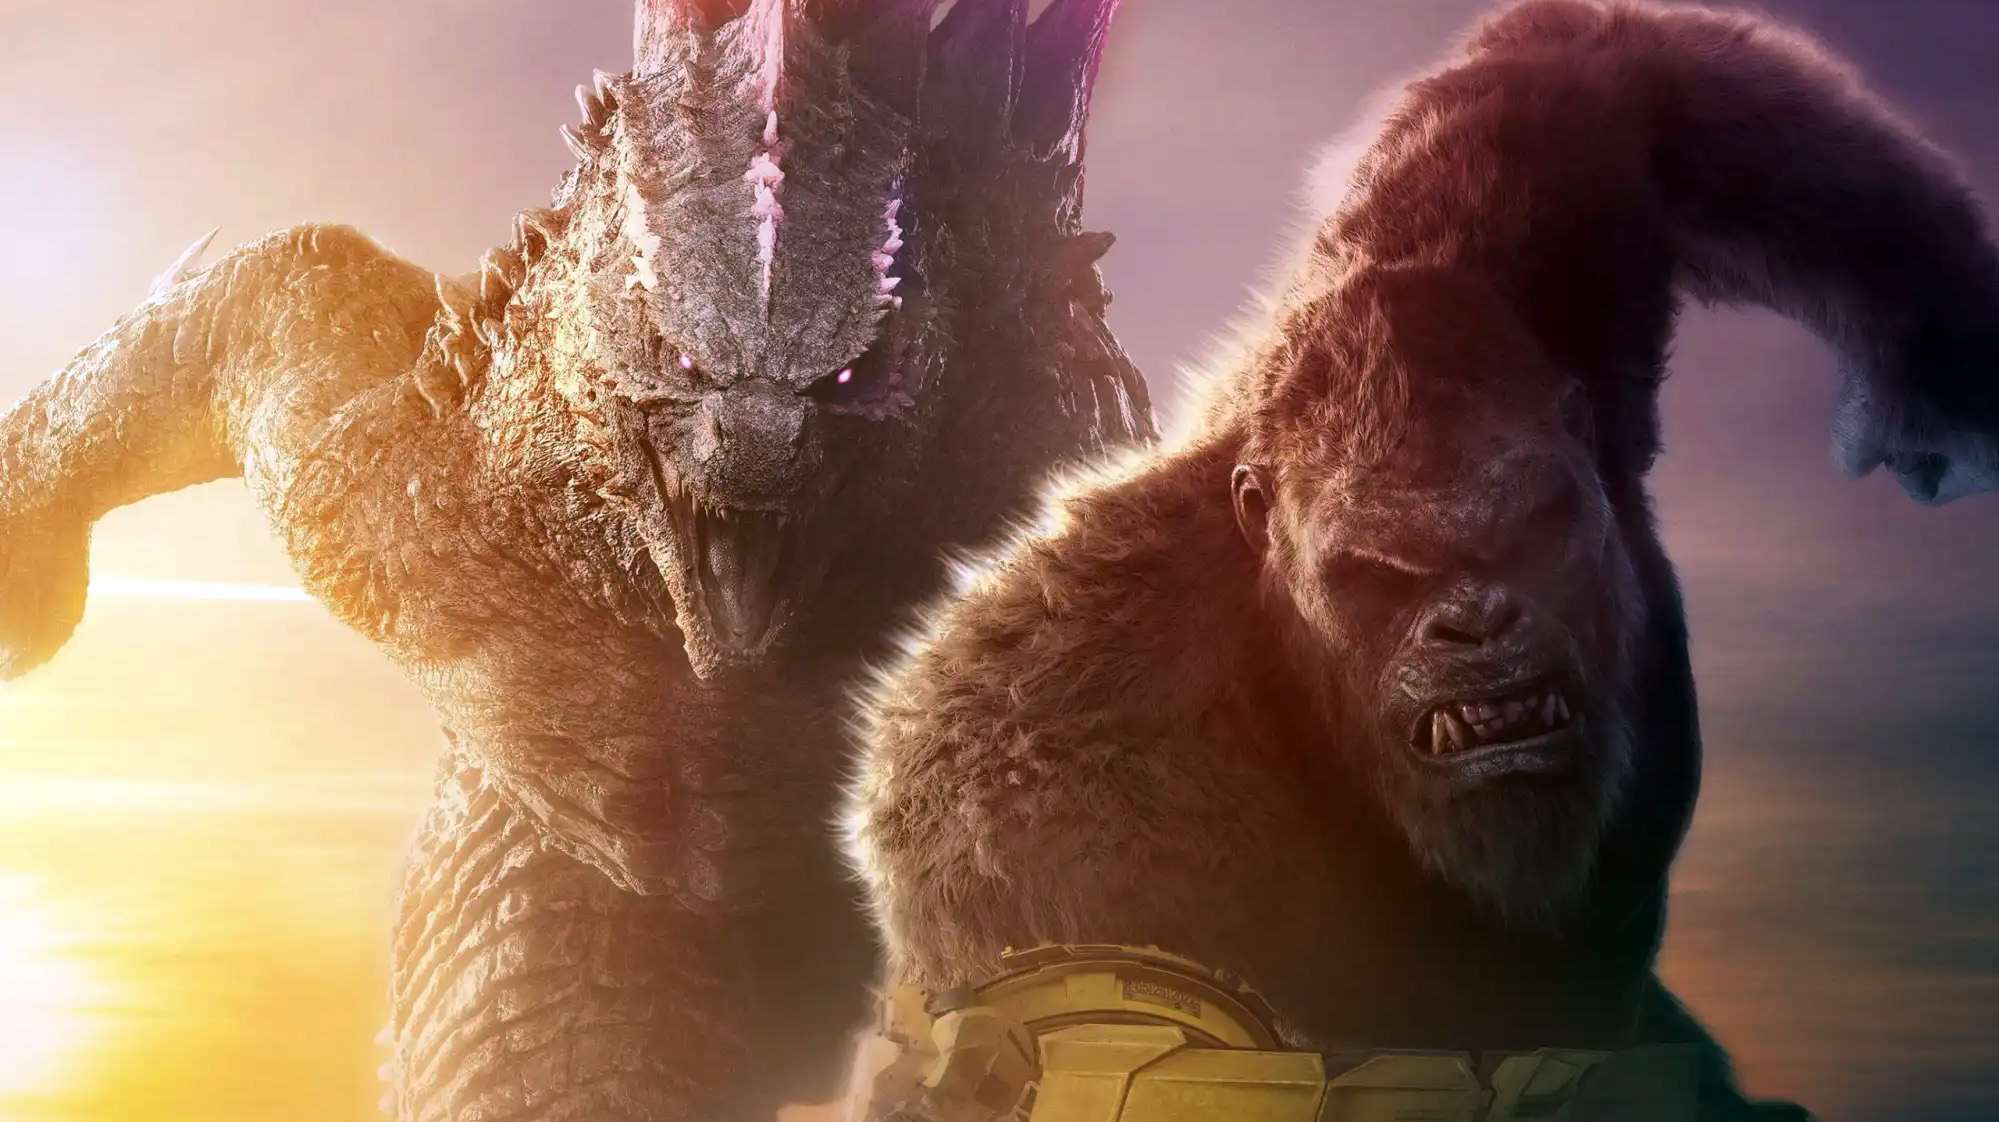 "Godzilla y Kong: El nuevo imperio / Godzilla x Kong: The New Empire"